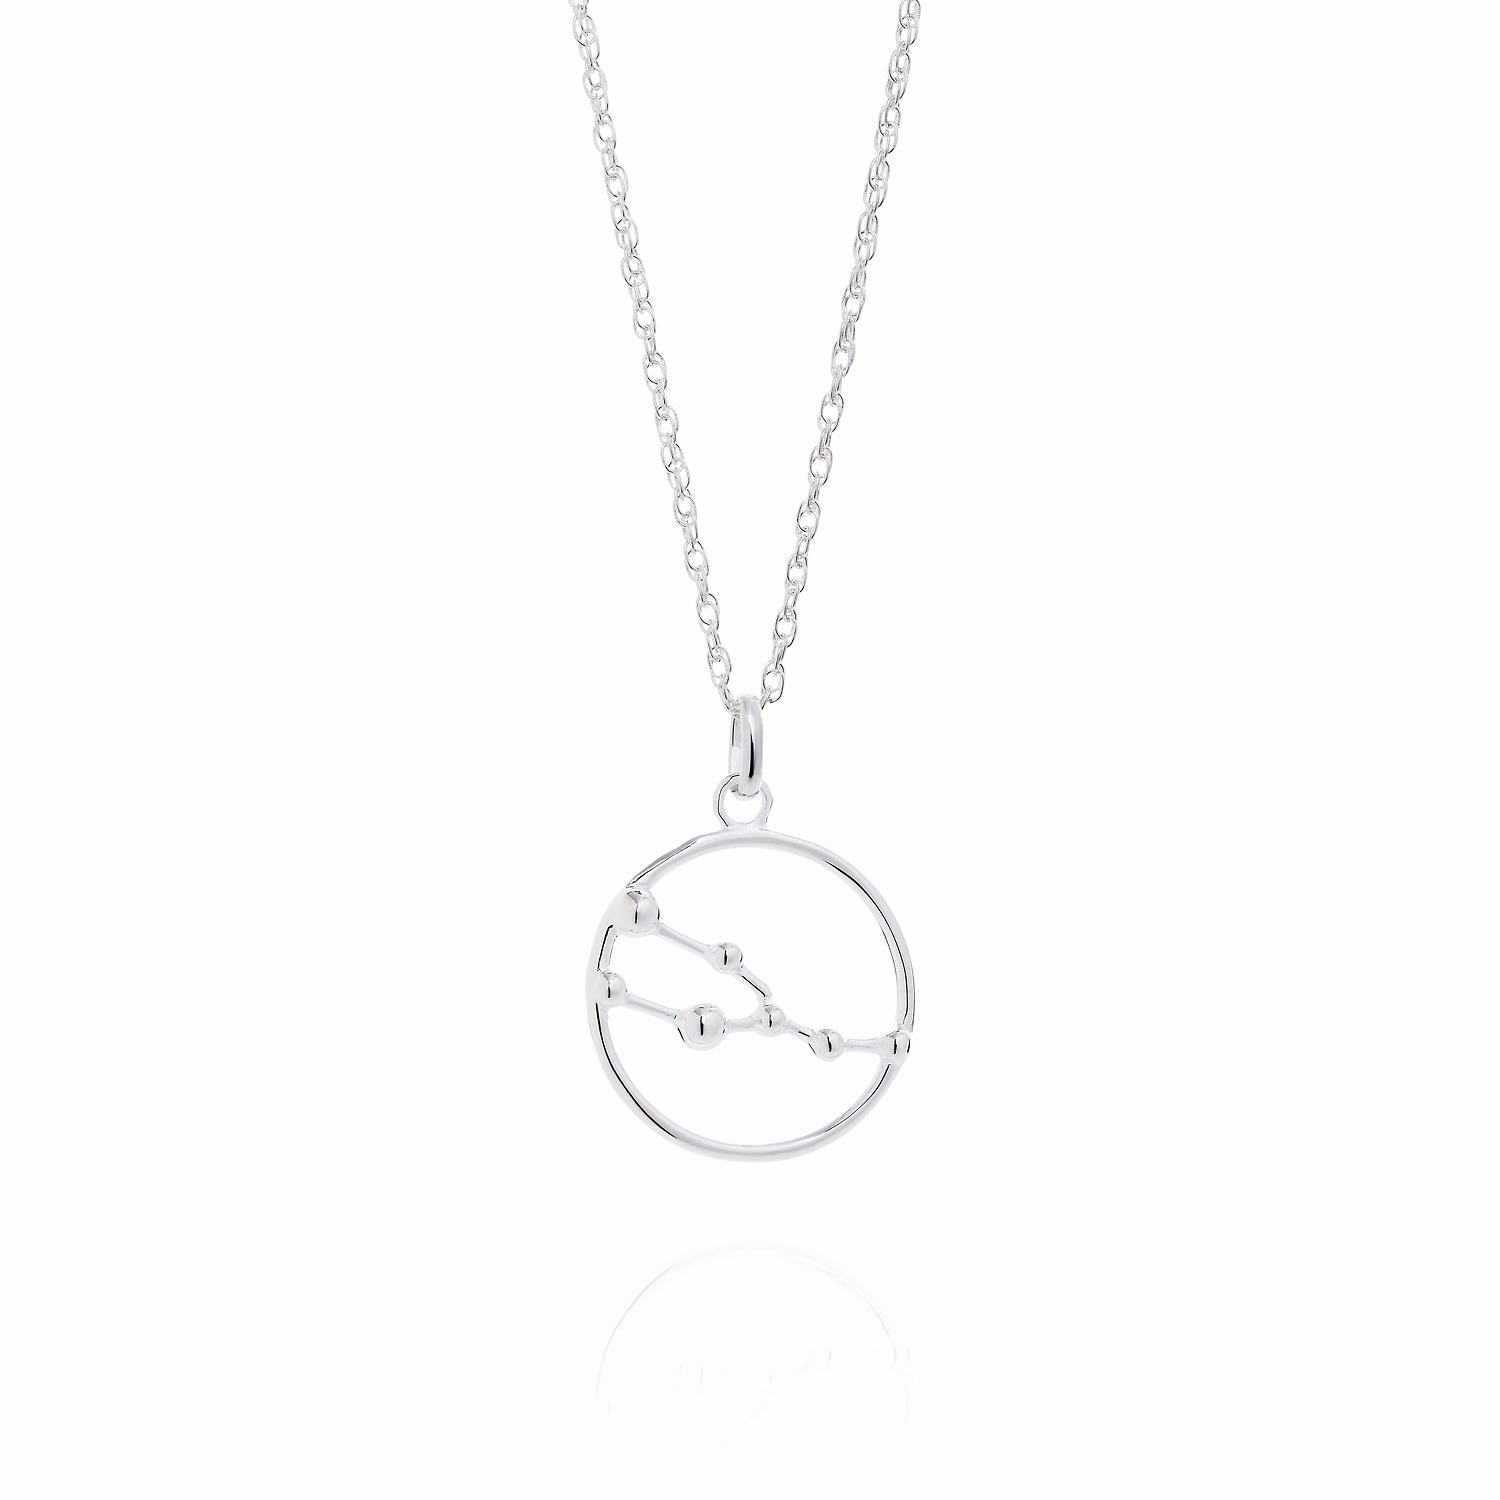 Women’s Silver Taurus Astrology Necklace Yasmin Everley Jewellery